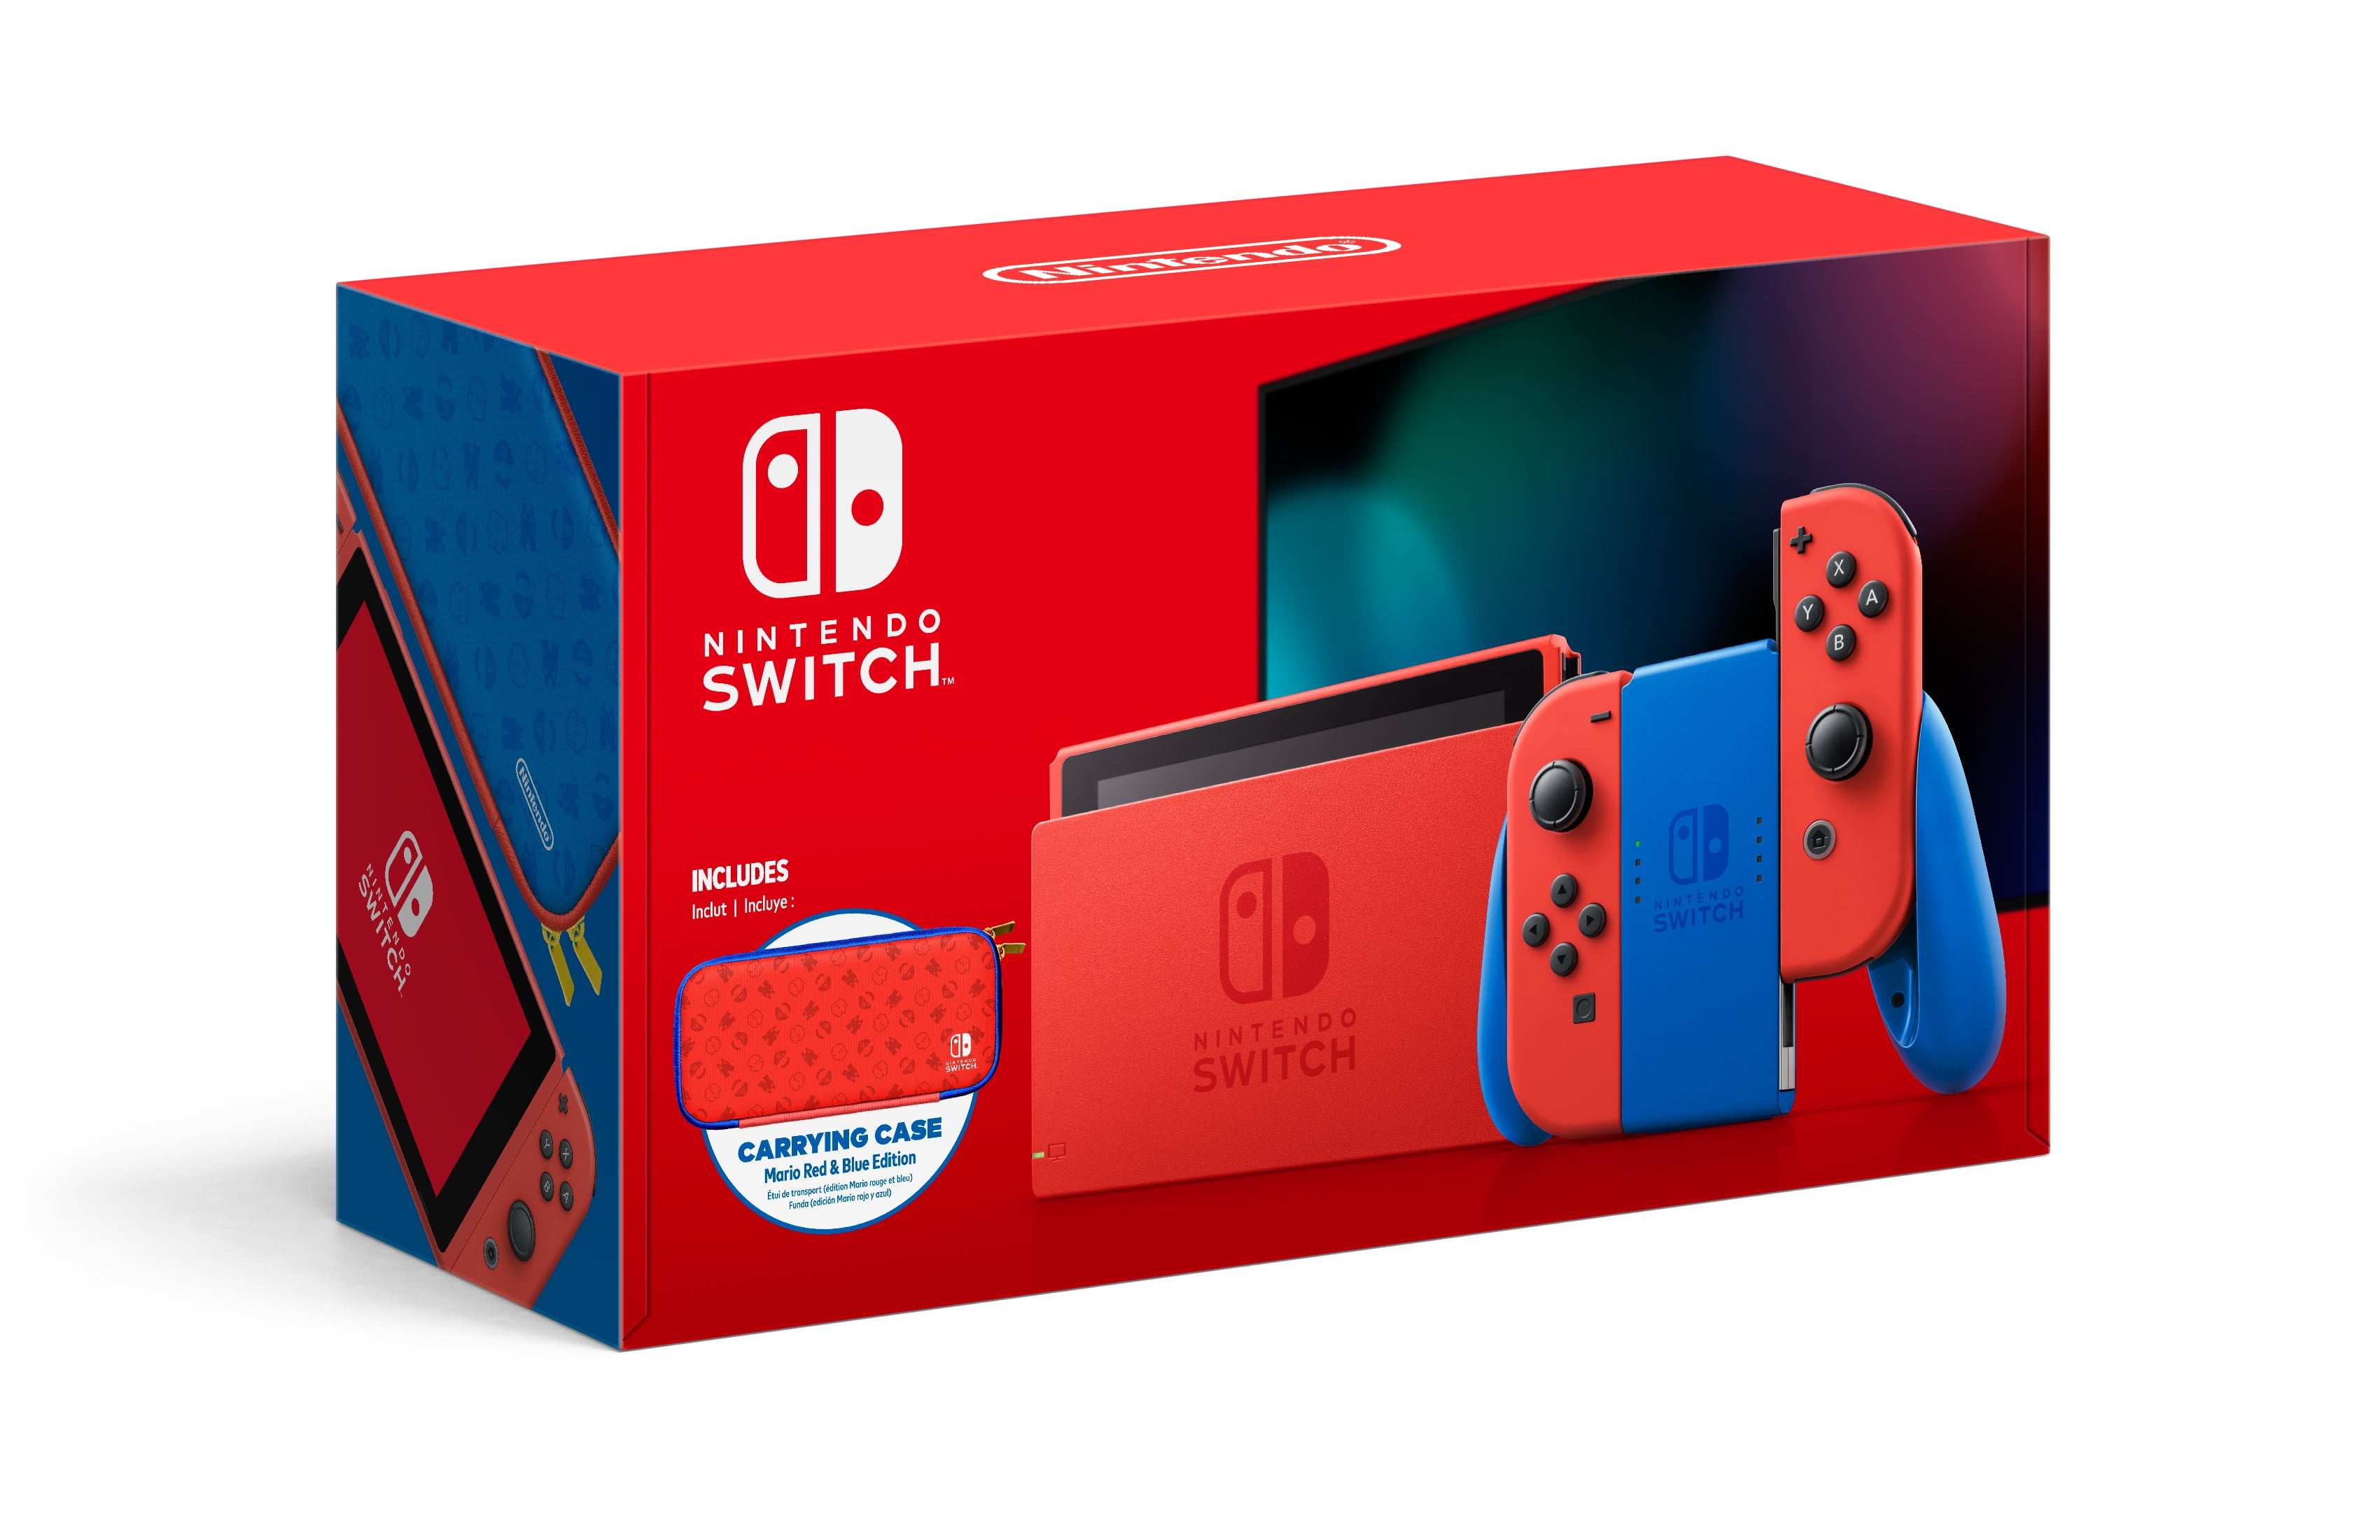 Nintendo Switch Console With Gray Joy-Con (2019) - Walmart.com